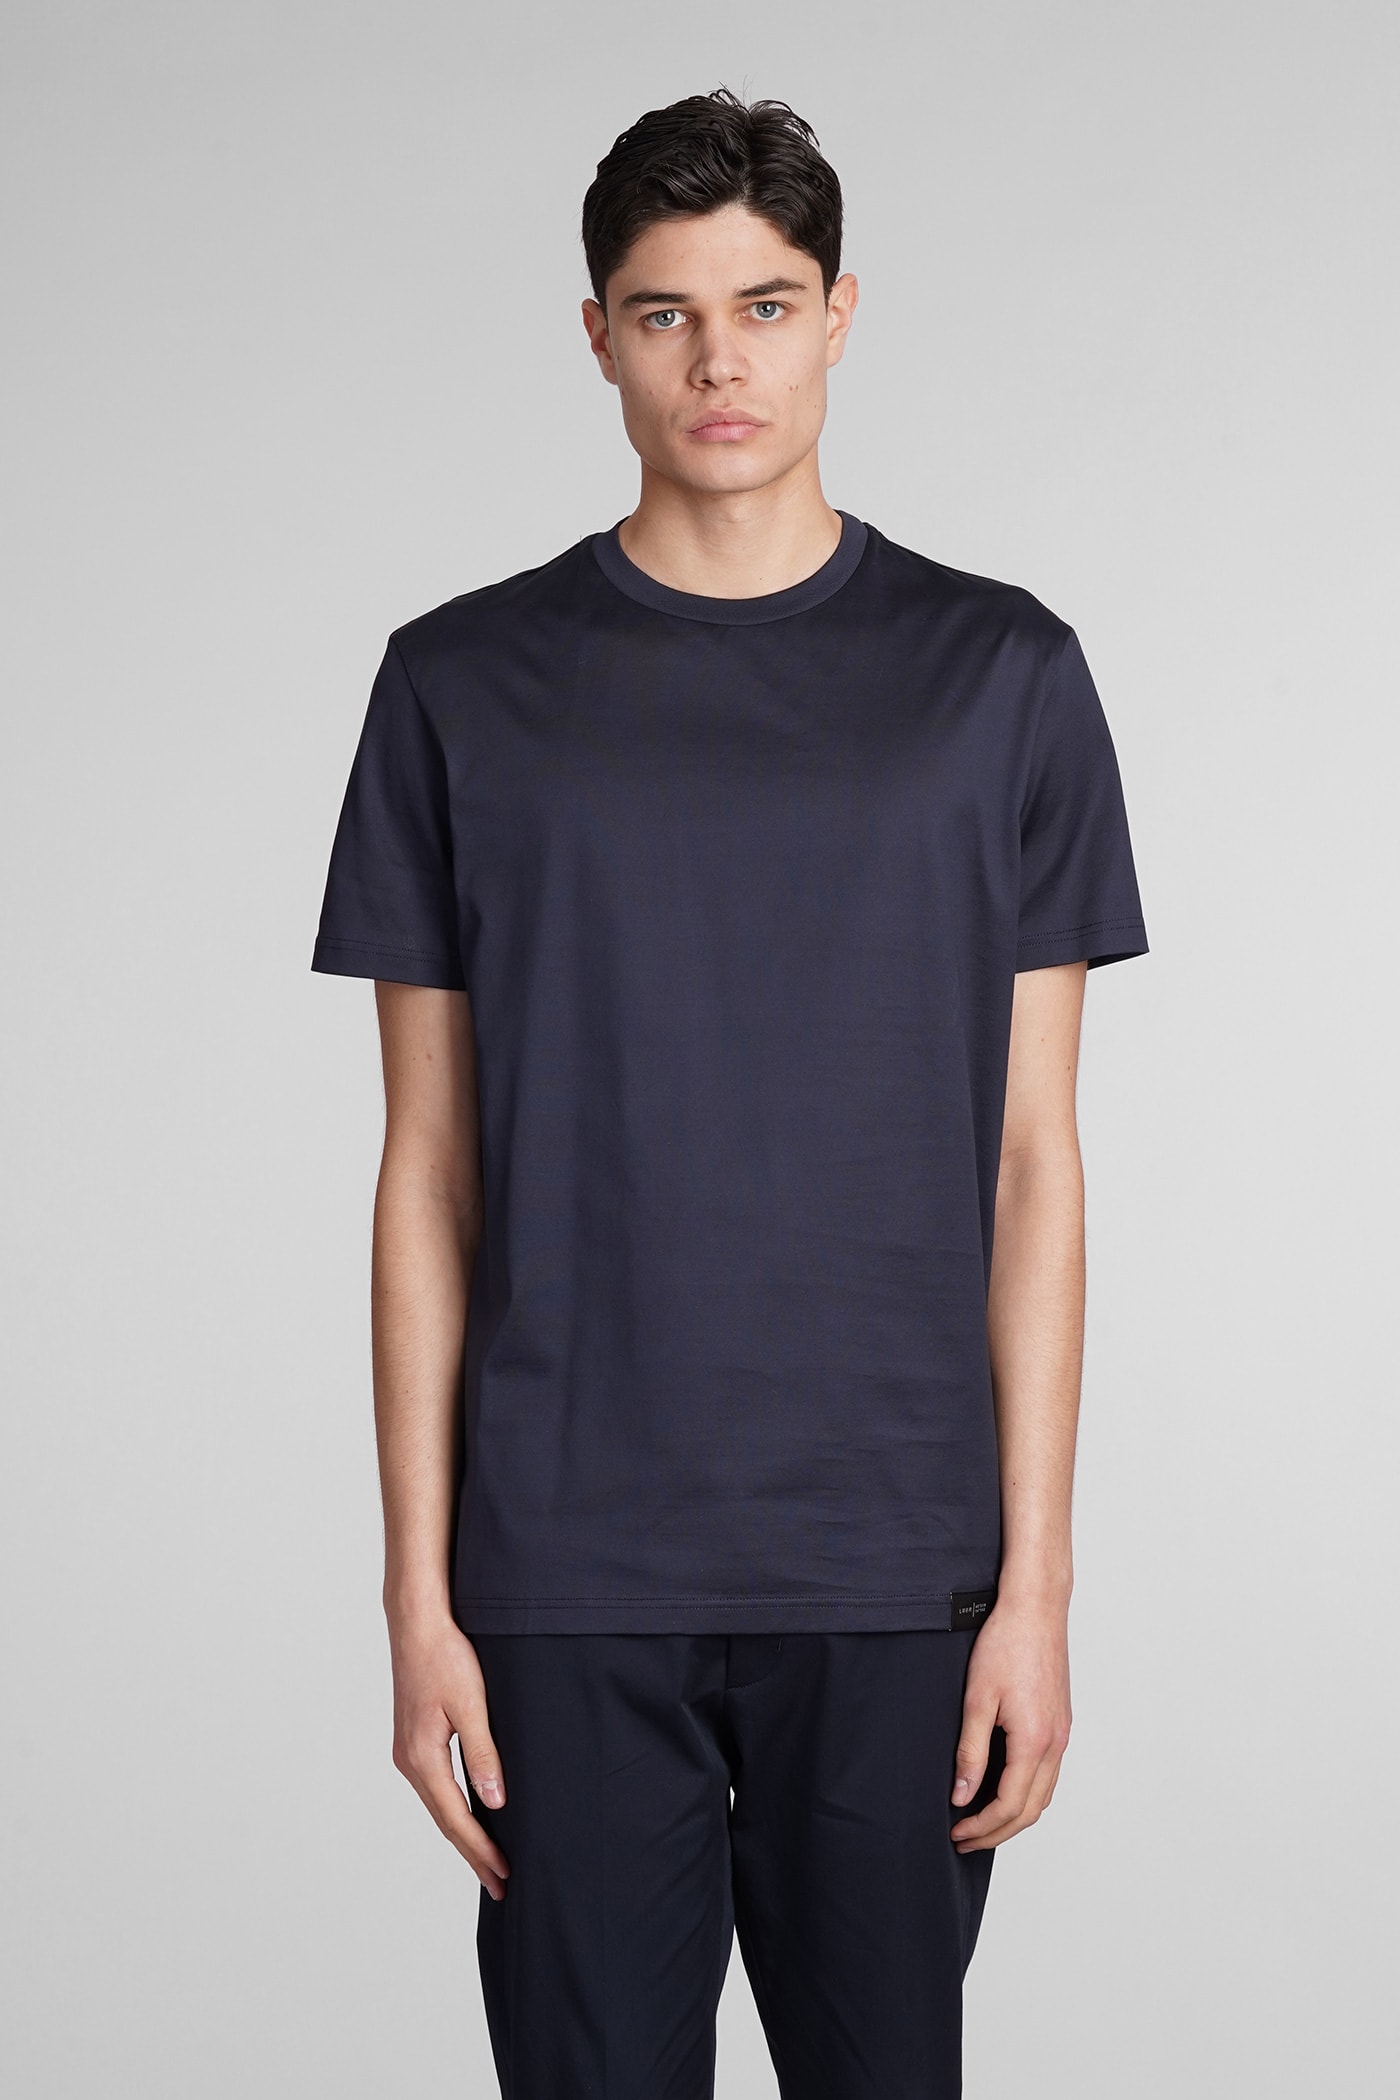 B134 Basic T-shirt In Blue Cotton